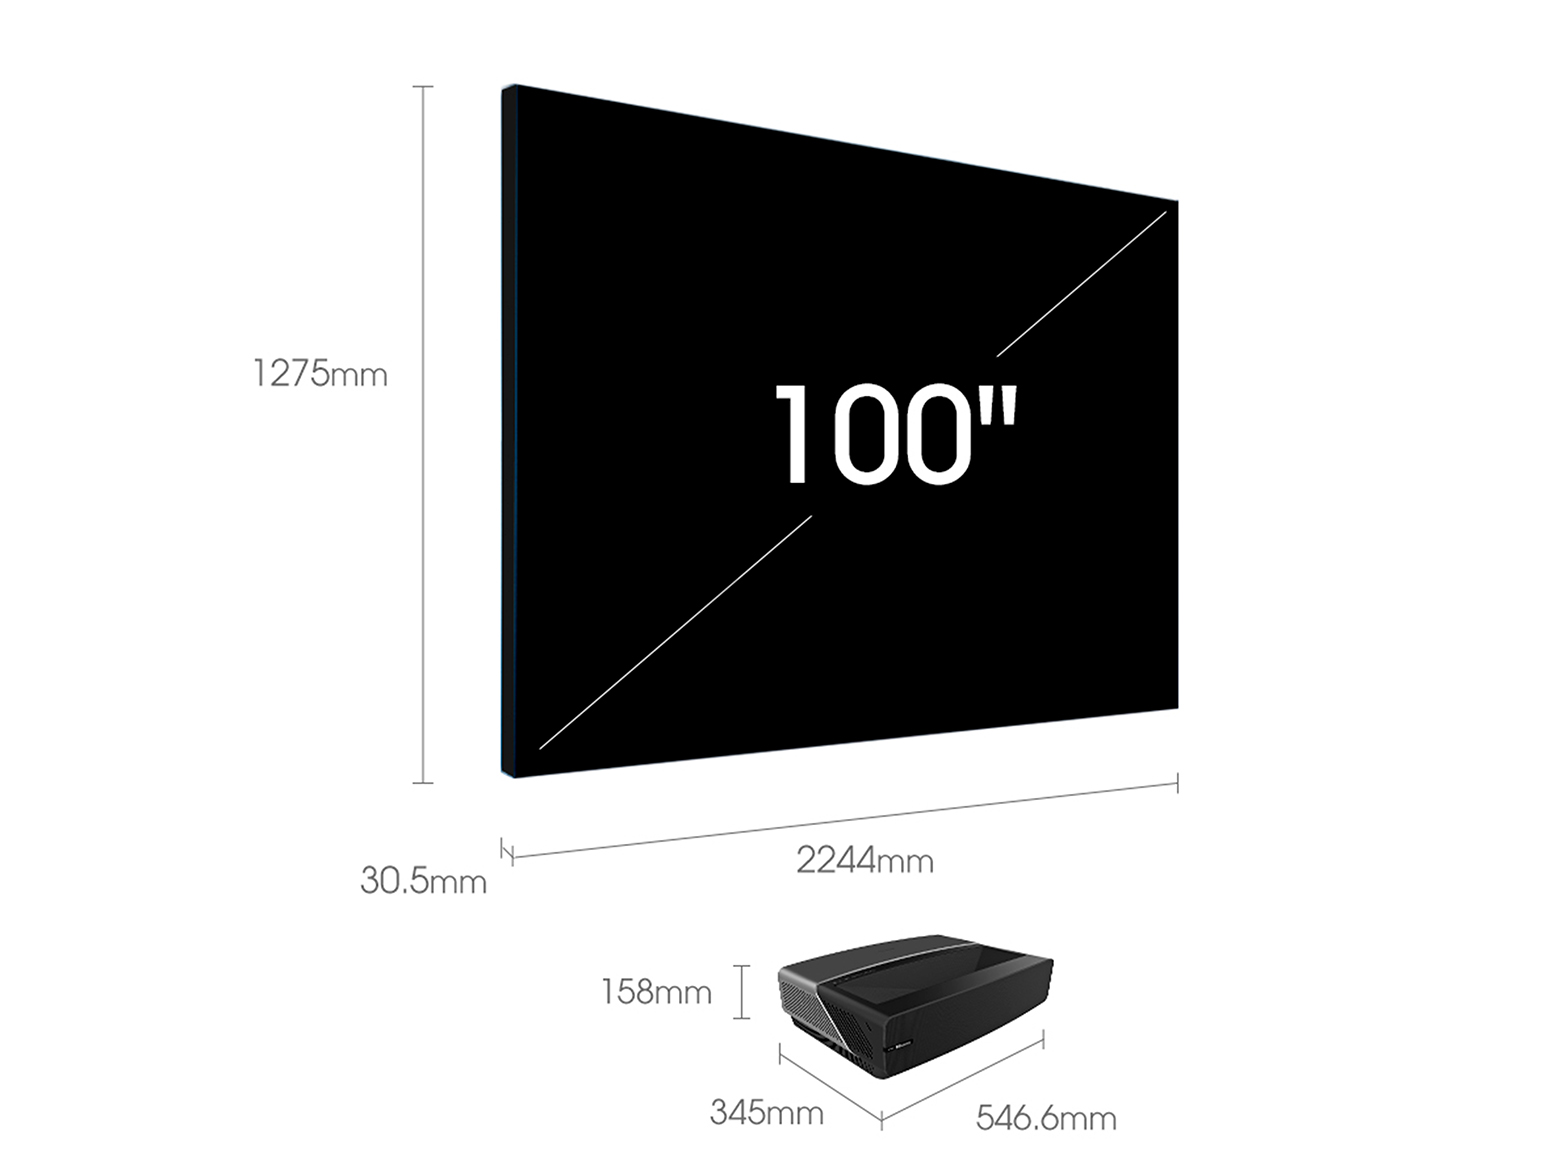 Hisense 100L5G (проектор + экран)